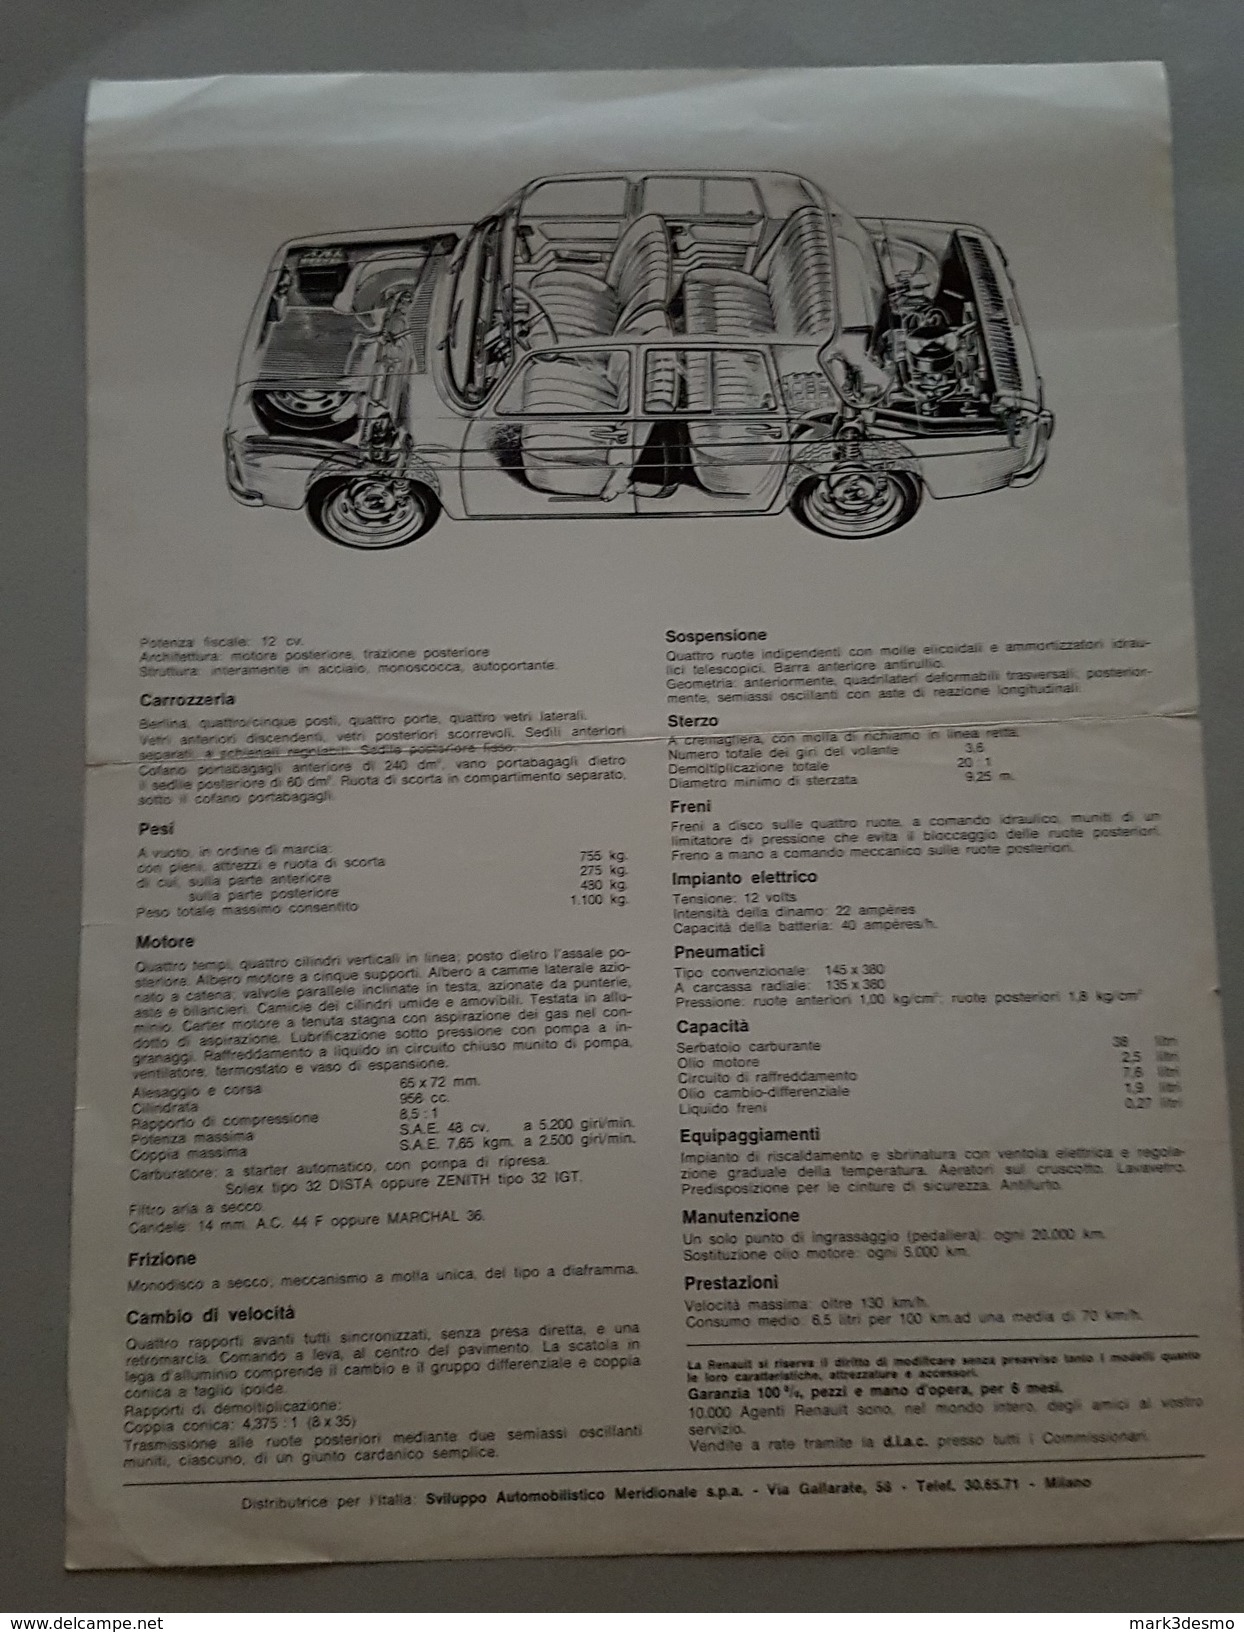 Renault 8 Depliant Originale Auto - Genuine Car Brochure - Prospekt - Motoren